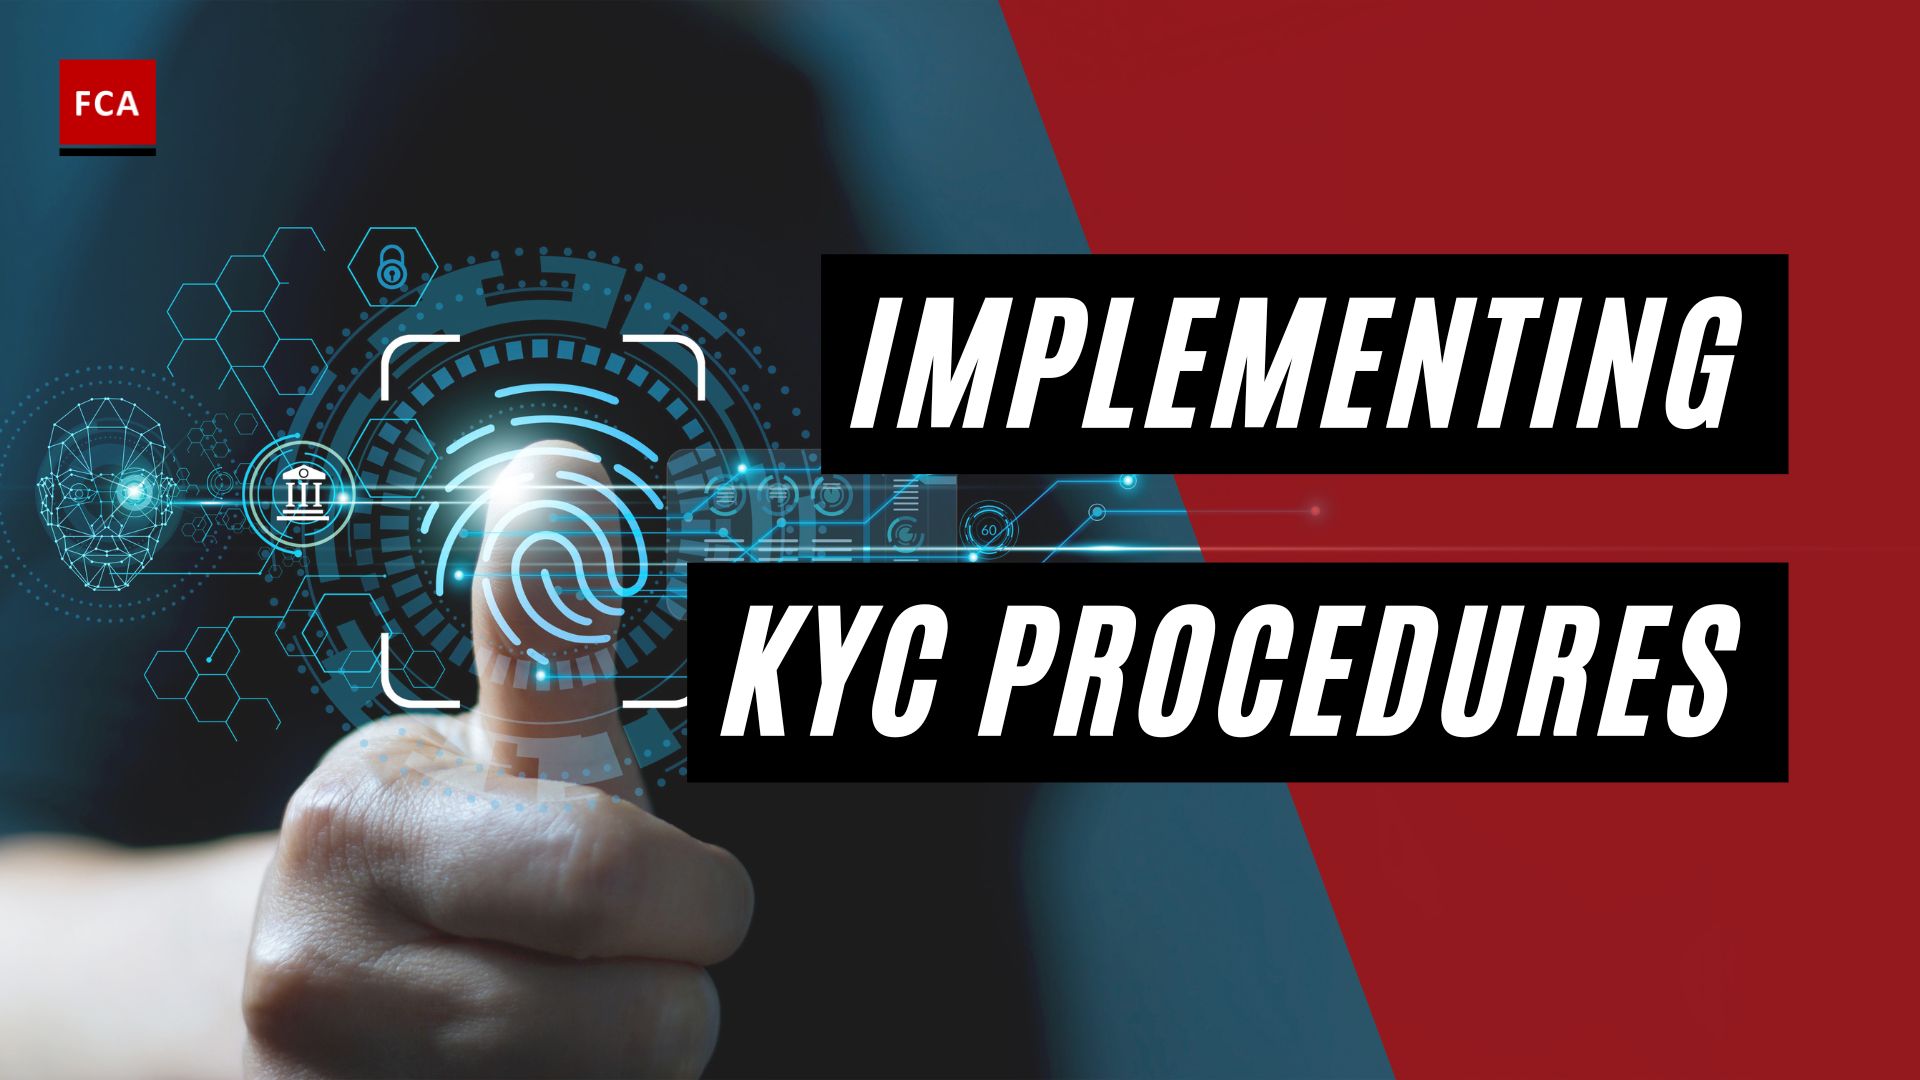 Implementing Kyc Procedures